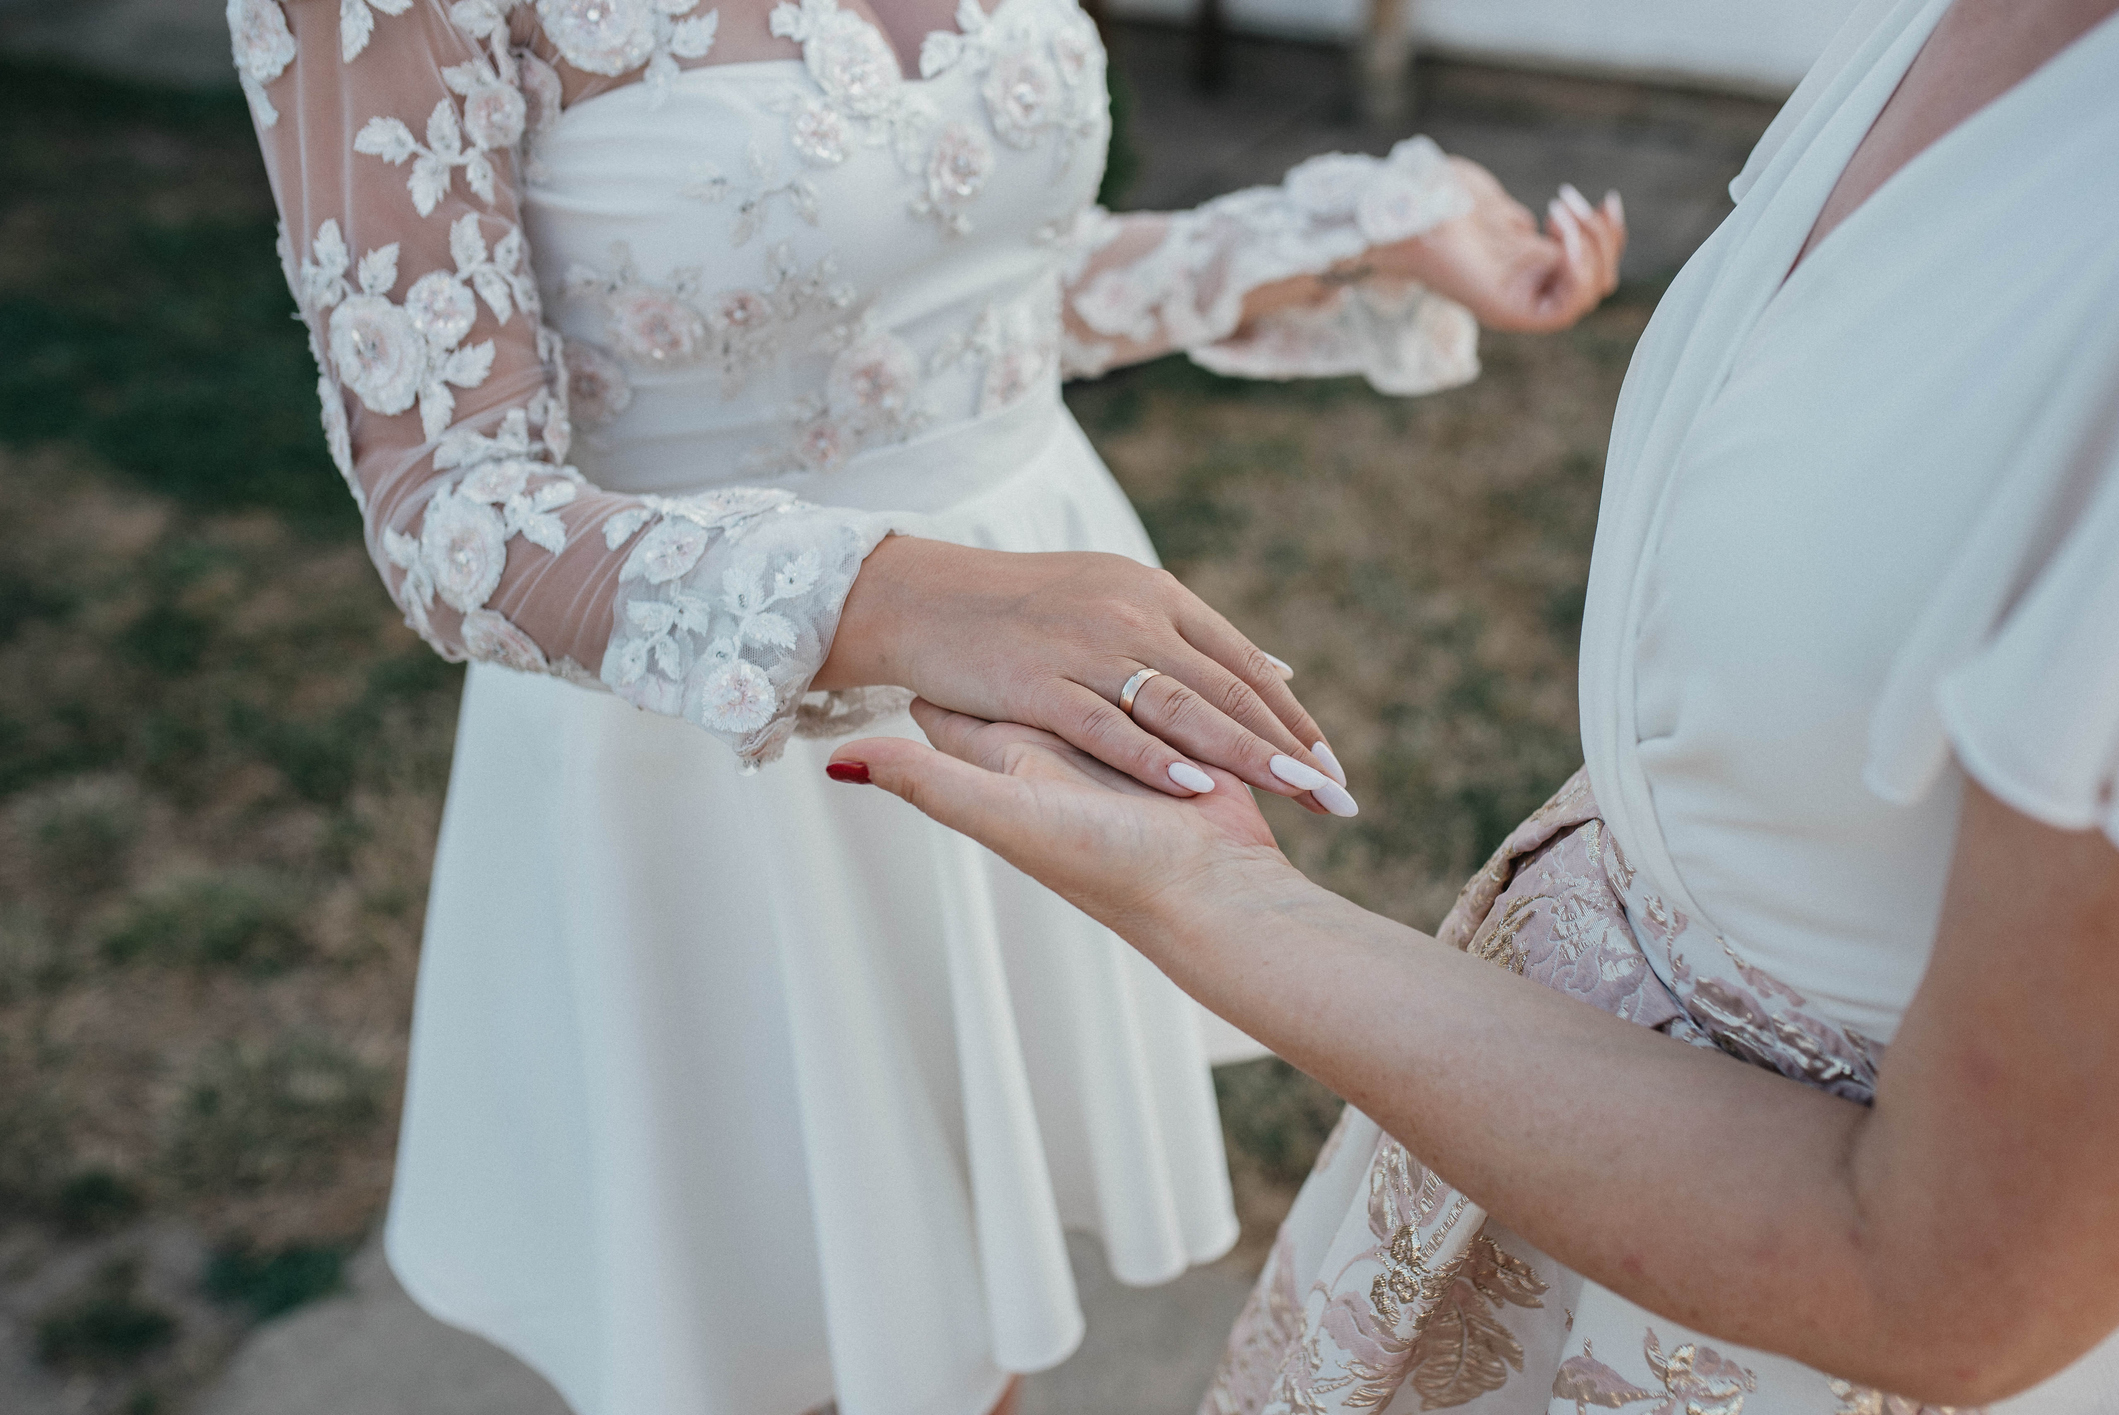 Wedding ceremony Visitor Sporting White Costume Stirs Debate On-line: ‘Disrespectful’